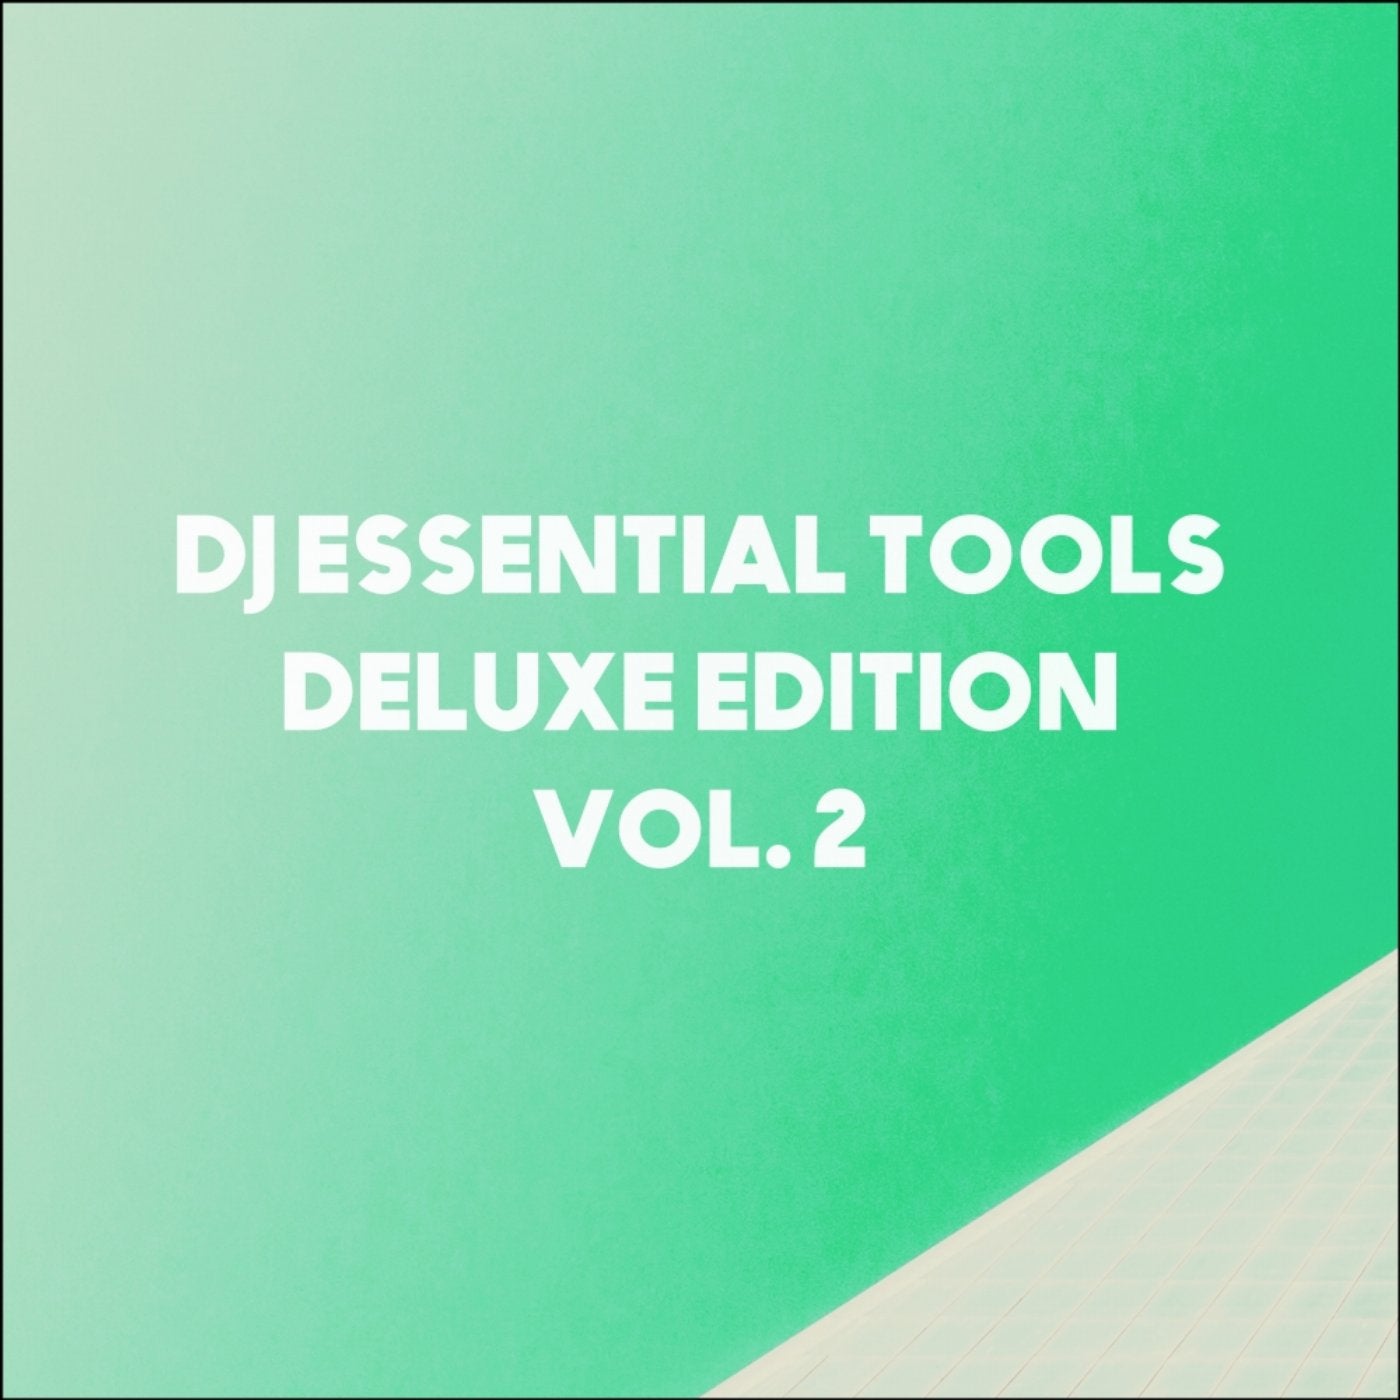 DJ Essential Tools Deluxe Edition, Vol. 2